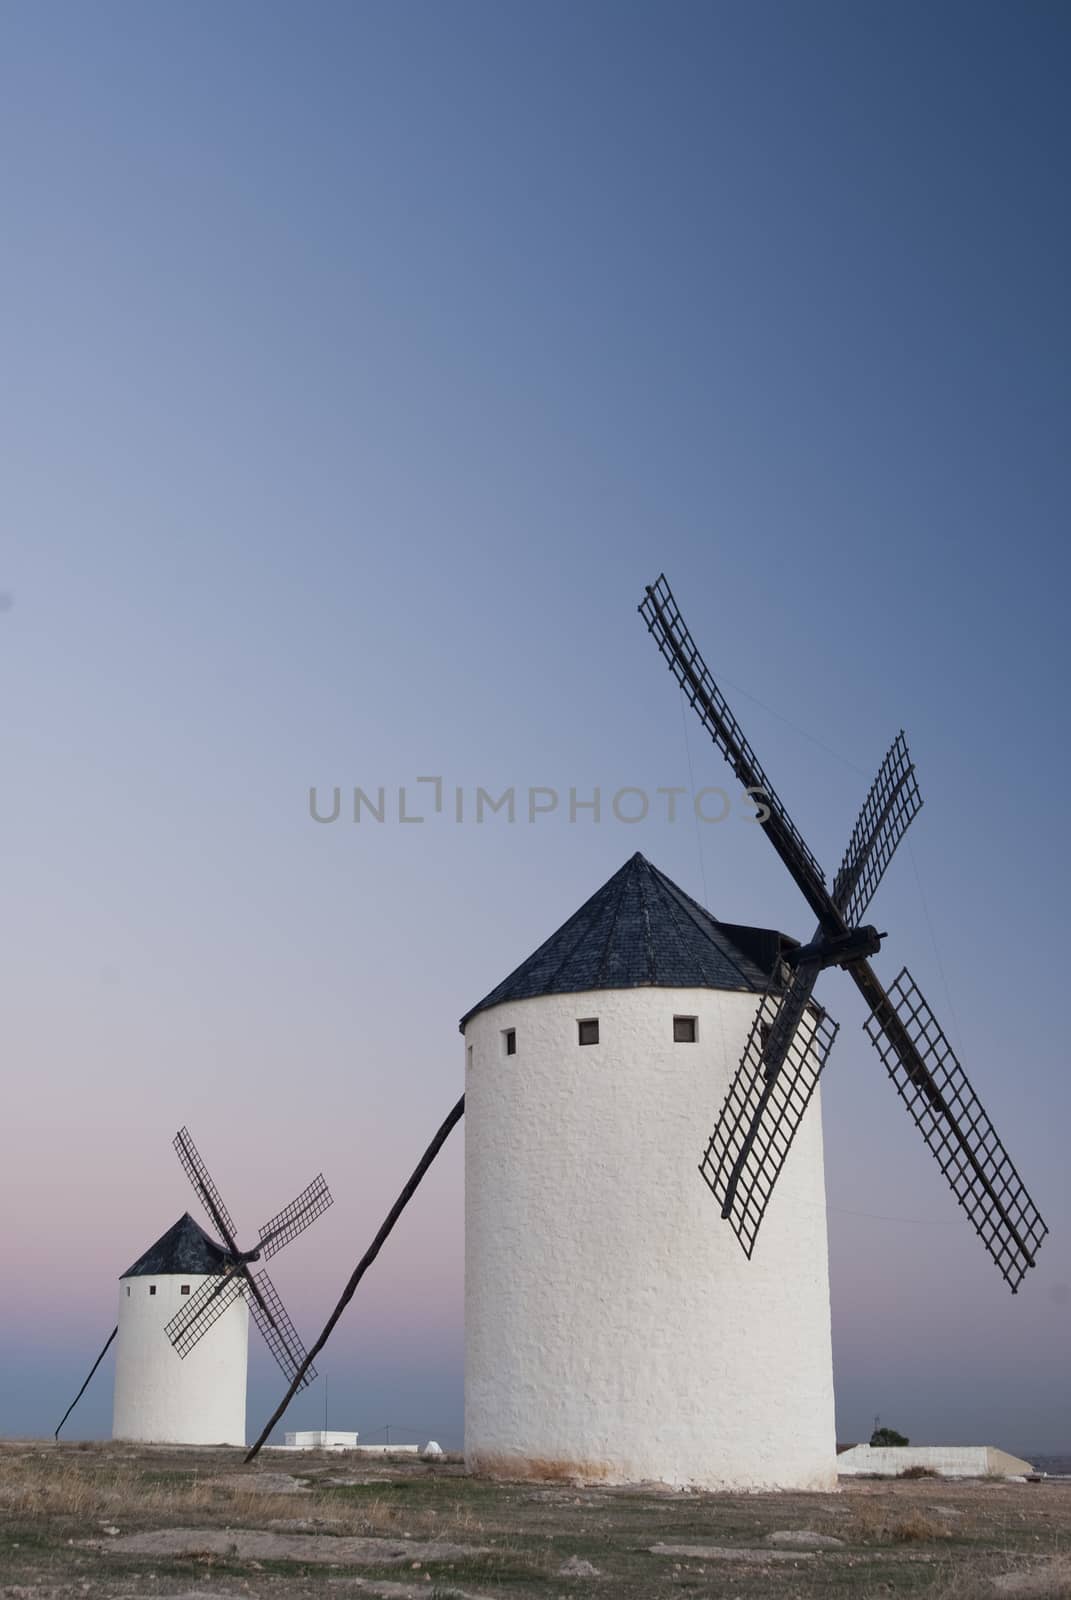 Windmills, Wind energy, Nocturnal Campo de Criptana, Ciudad Real by jalonsohu@gmail.com